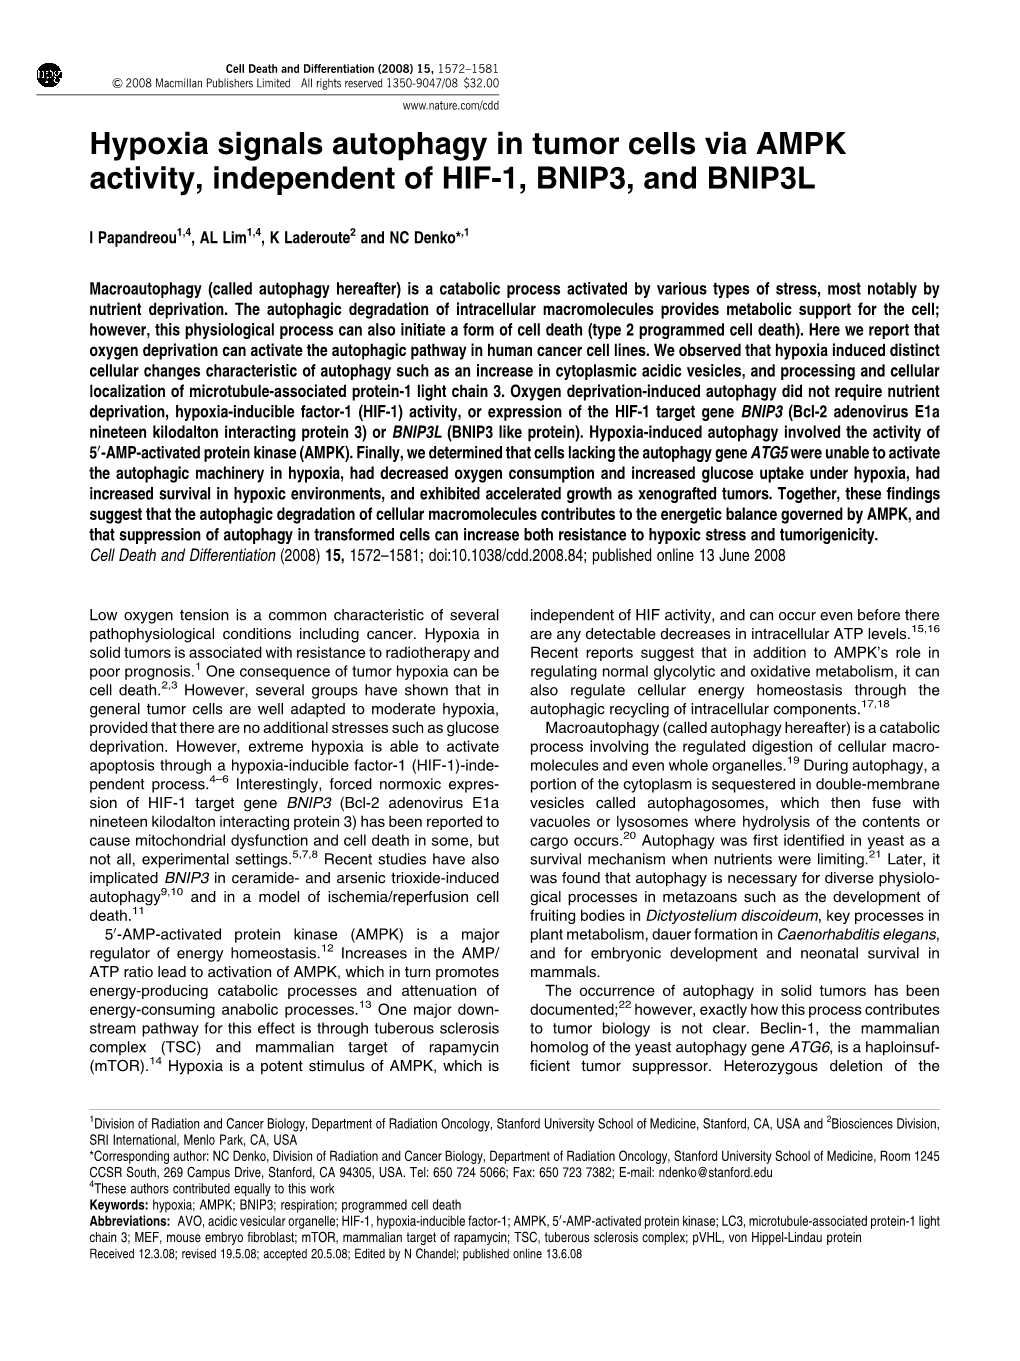 Hypoxia Signals Autophagy in Tumor Cells Via AMPK Activity, Independent of HIF-1, BNIP3, and BNIP3L